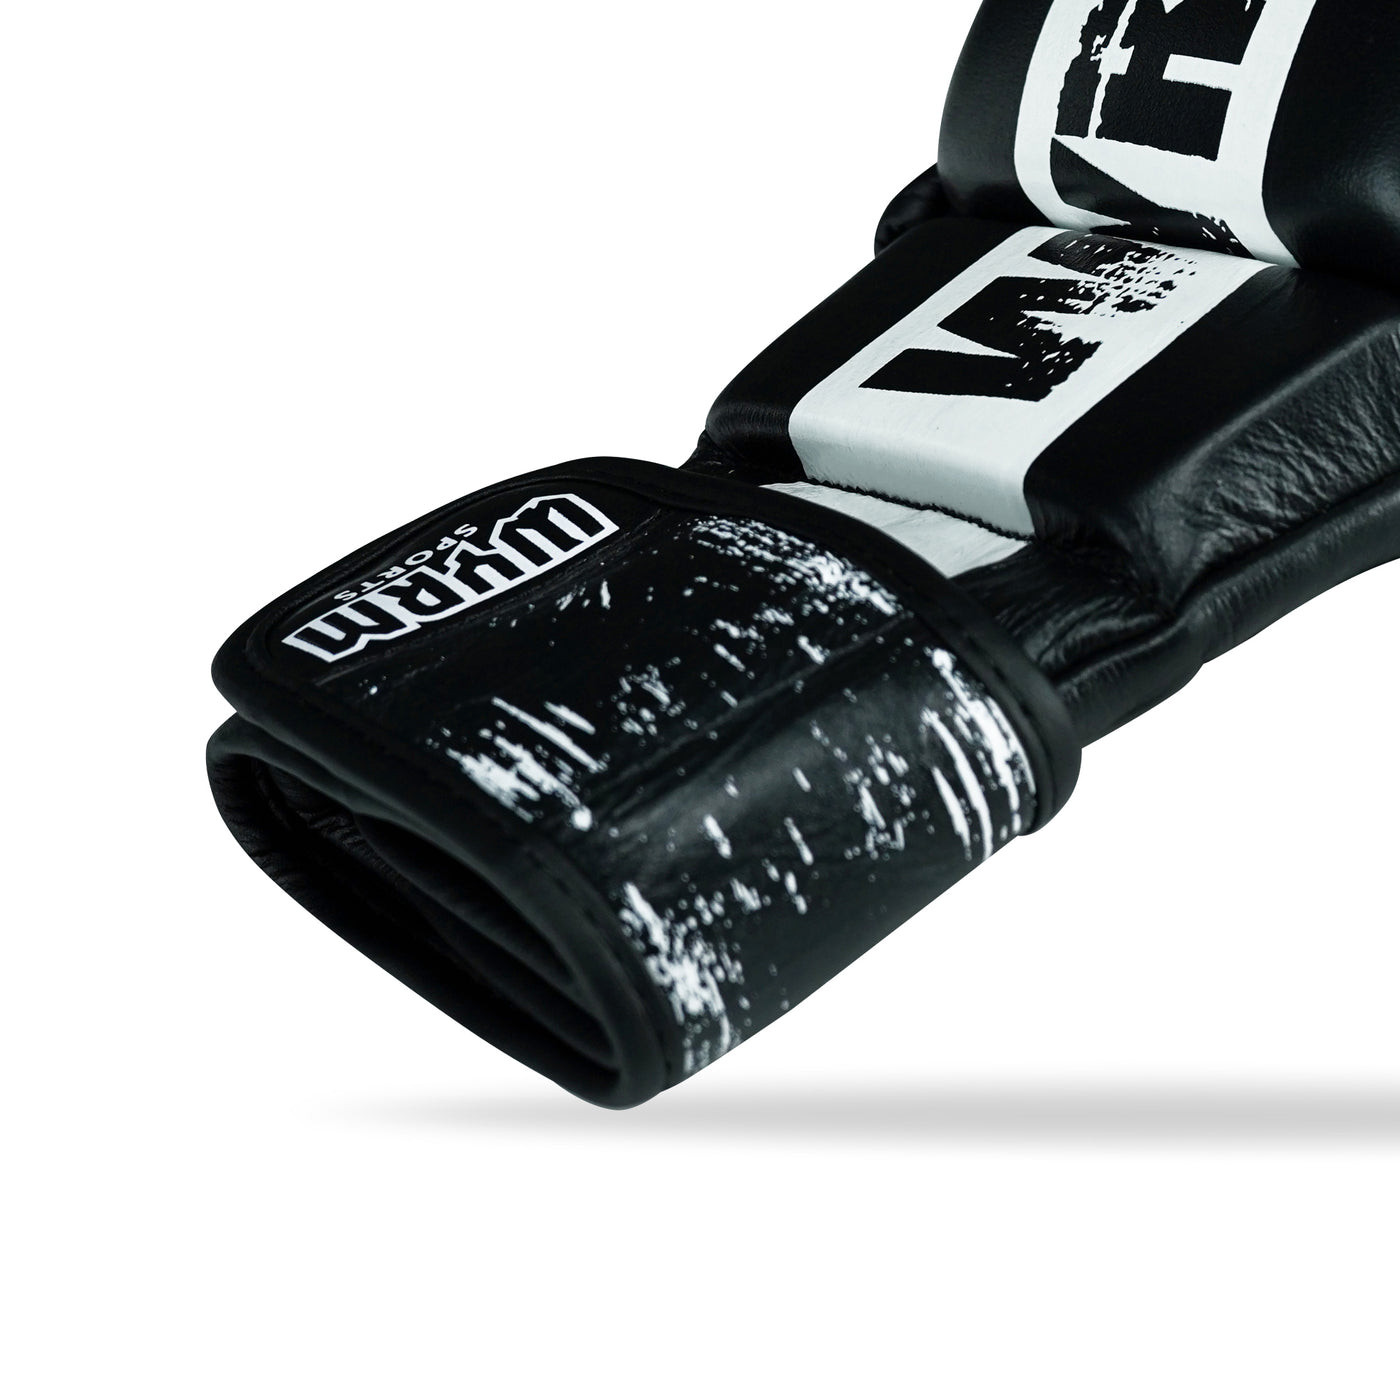 Pounder Black/White Genuine Leather MMA Training Gloves